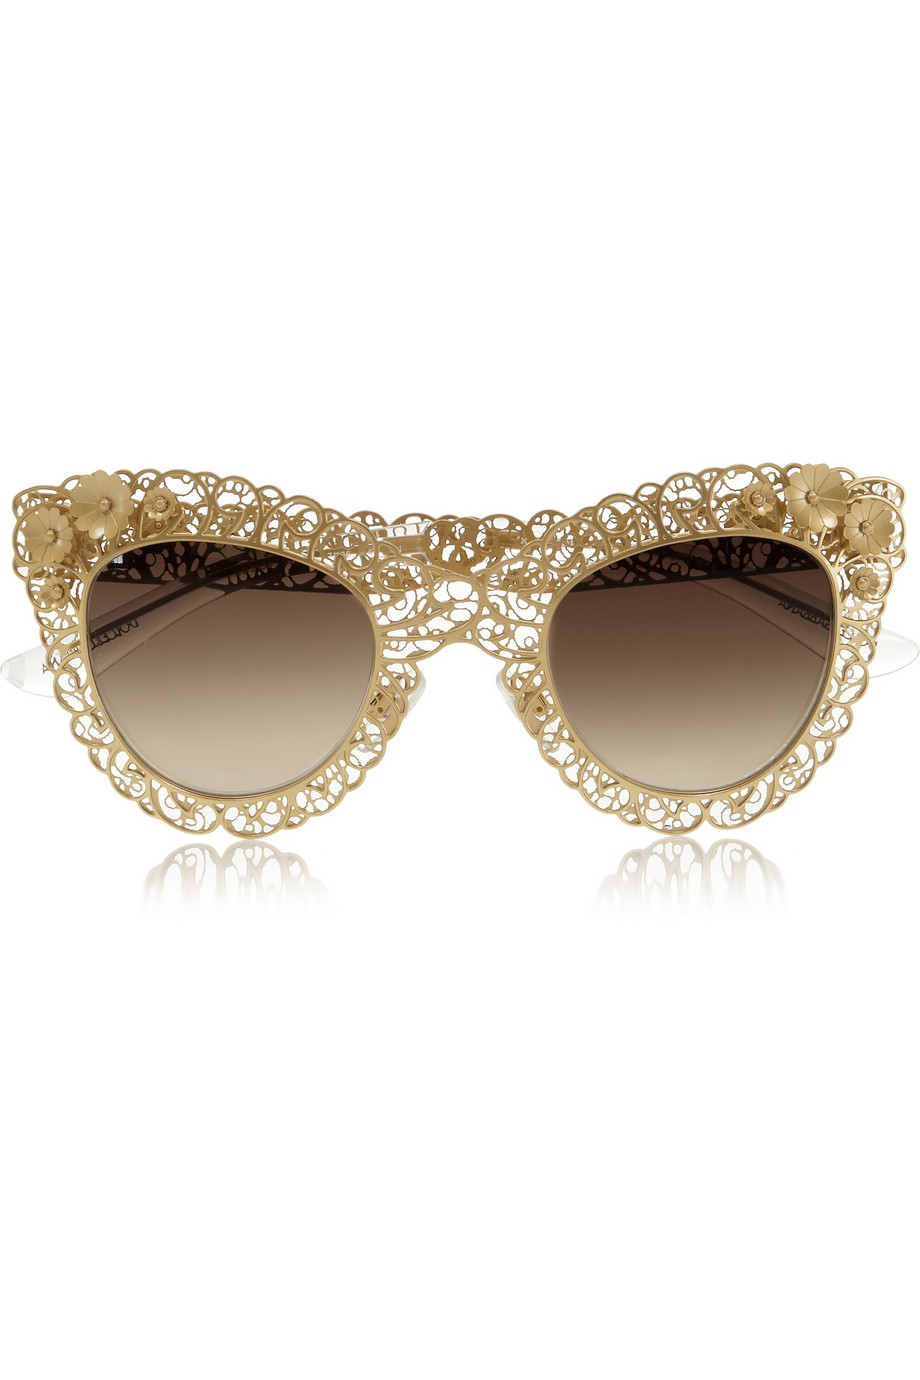 Lyst - Dolce & Gabbana Cat Eye Filigree Goldtone Sunglasses in Metallic